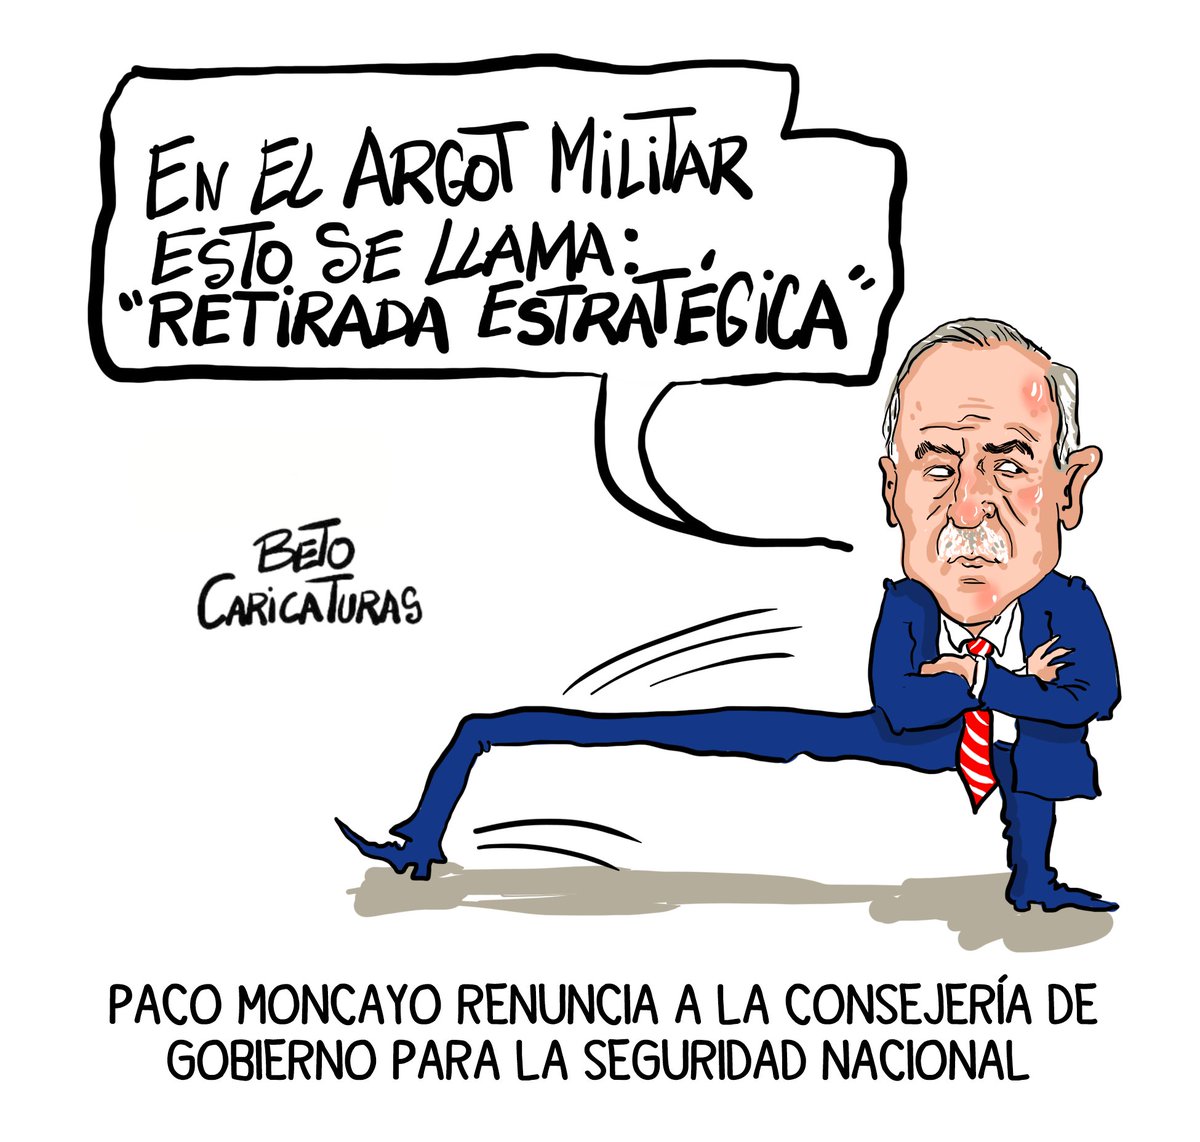 #PacoMoncayo #Renuncia #gobiernolasso #betocaricaturas